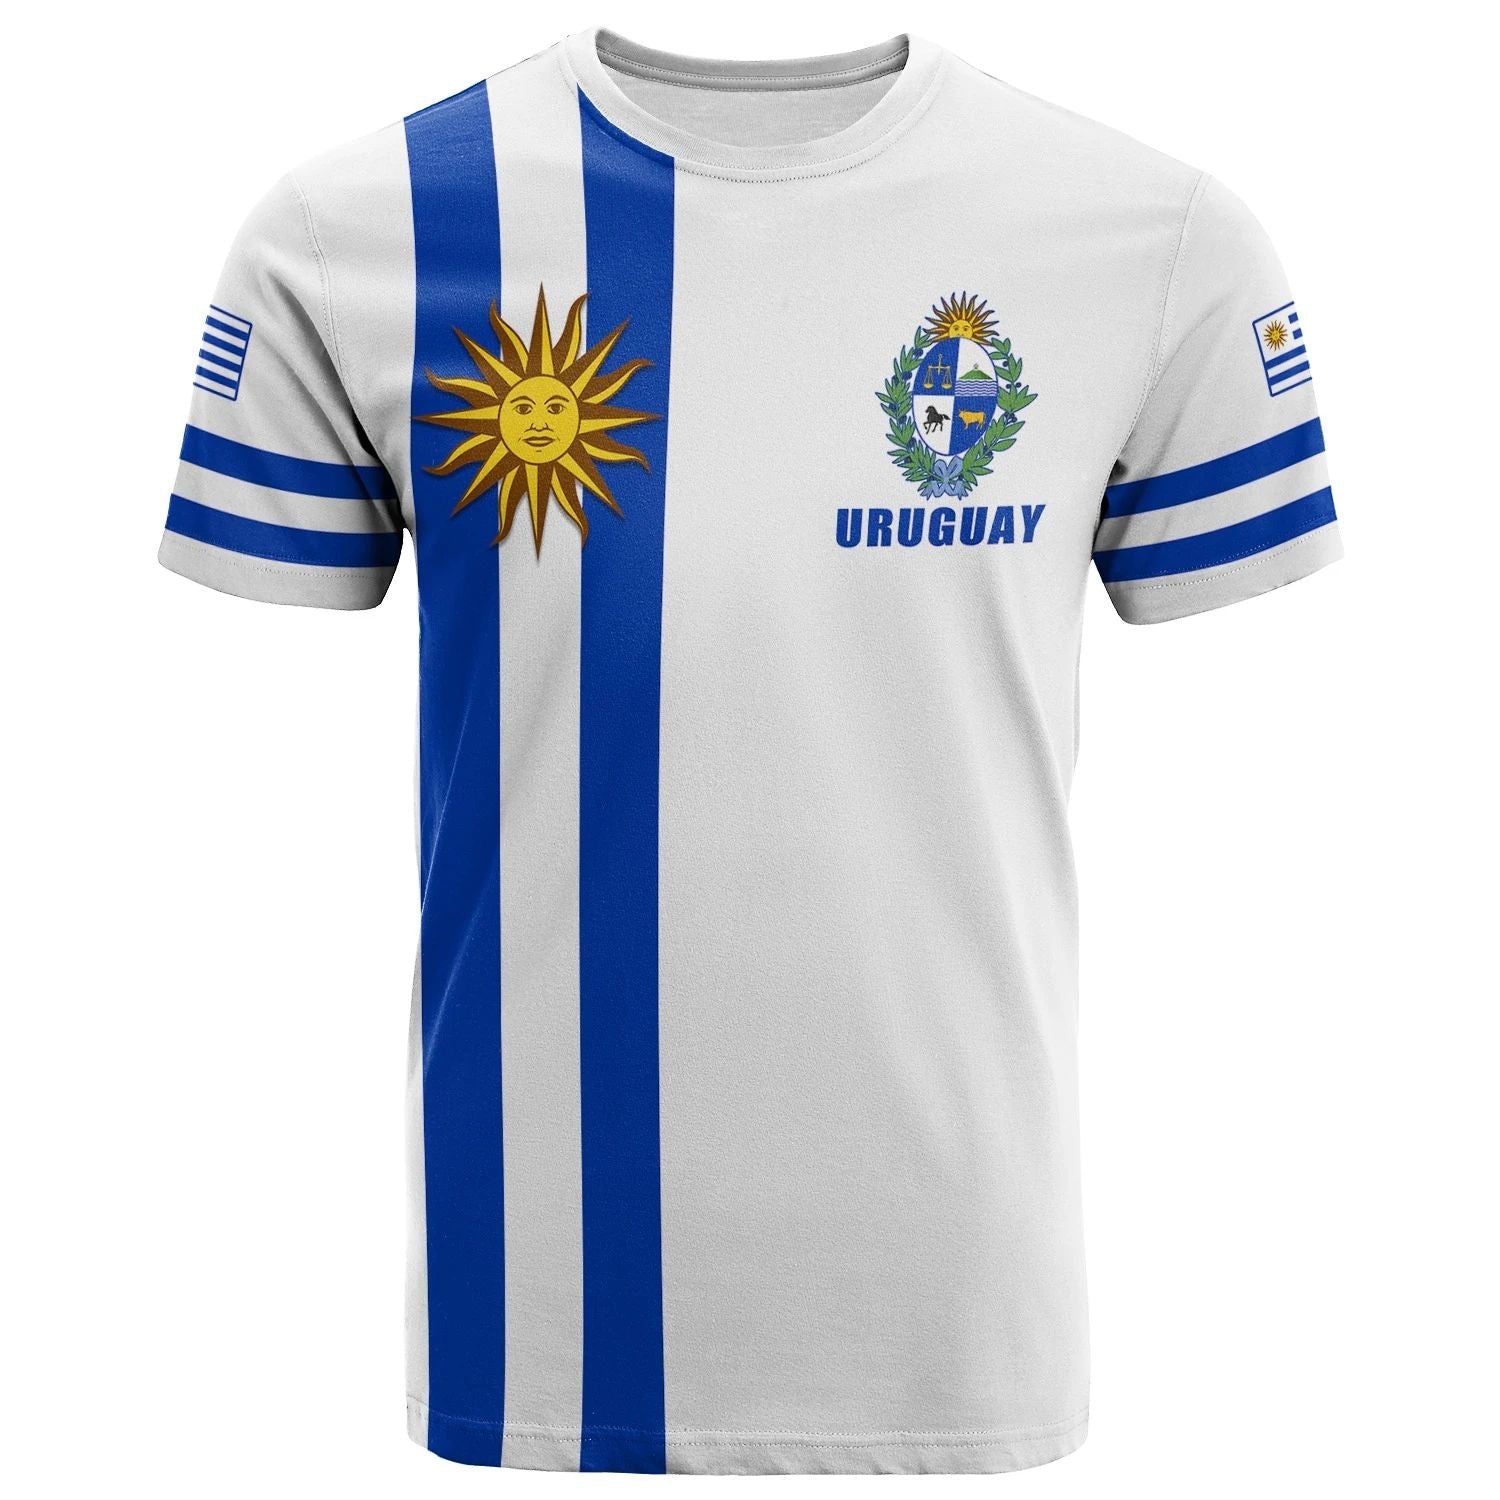 uruguay-t-shirt-striped